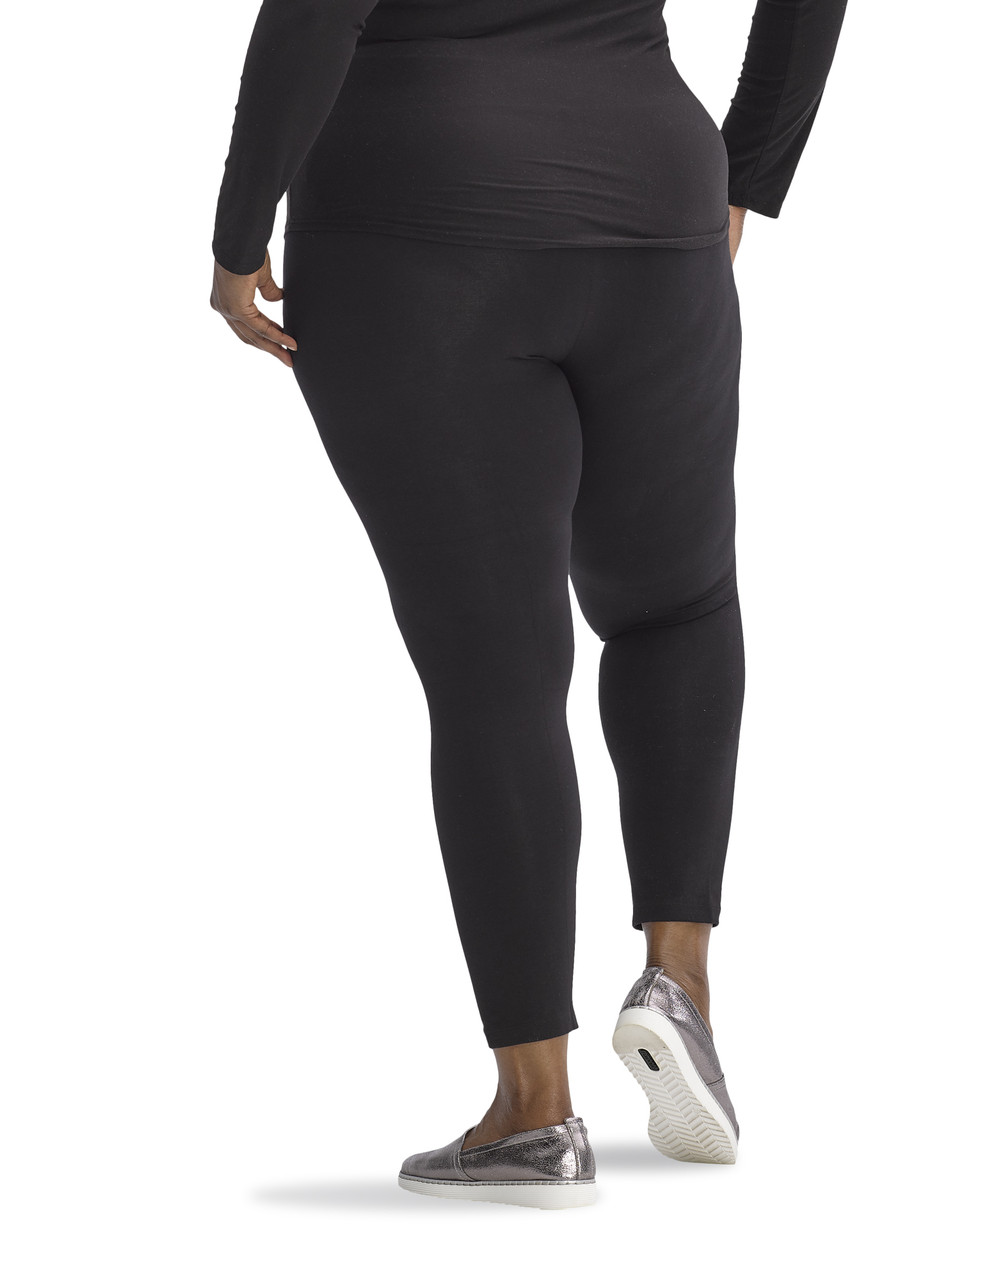 Buy ENES Fashion Cotton Lycra 2 Way Stretchable Soft Women Leggings Combo  (Black Grey, Large) at